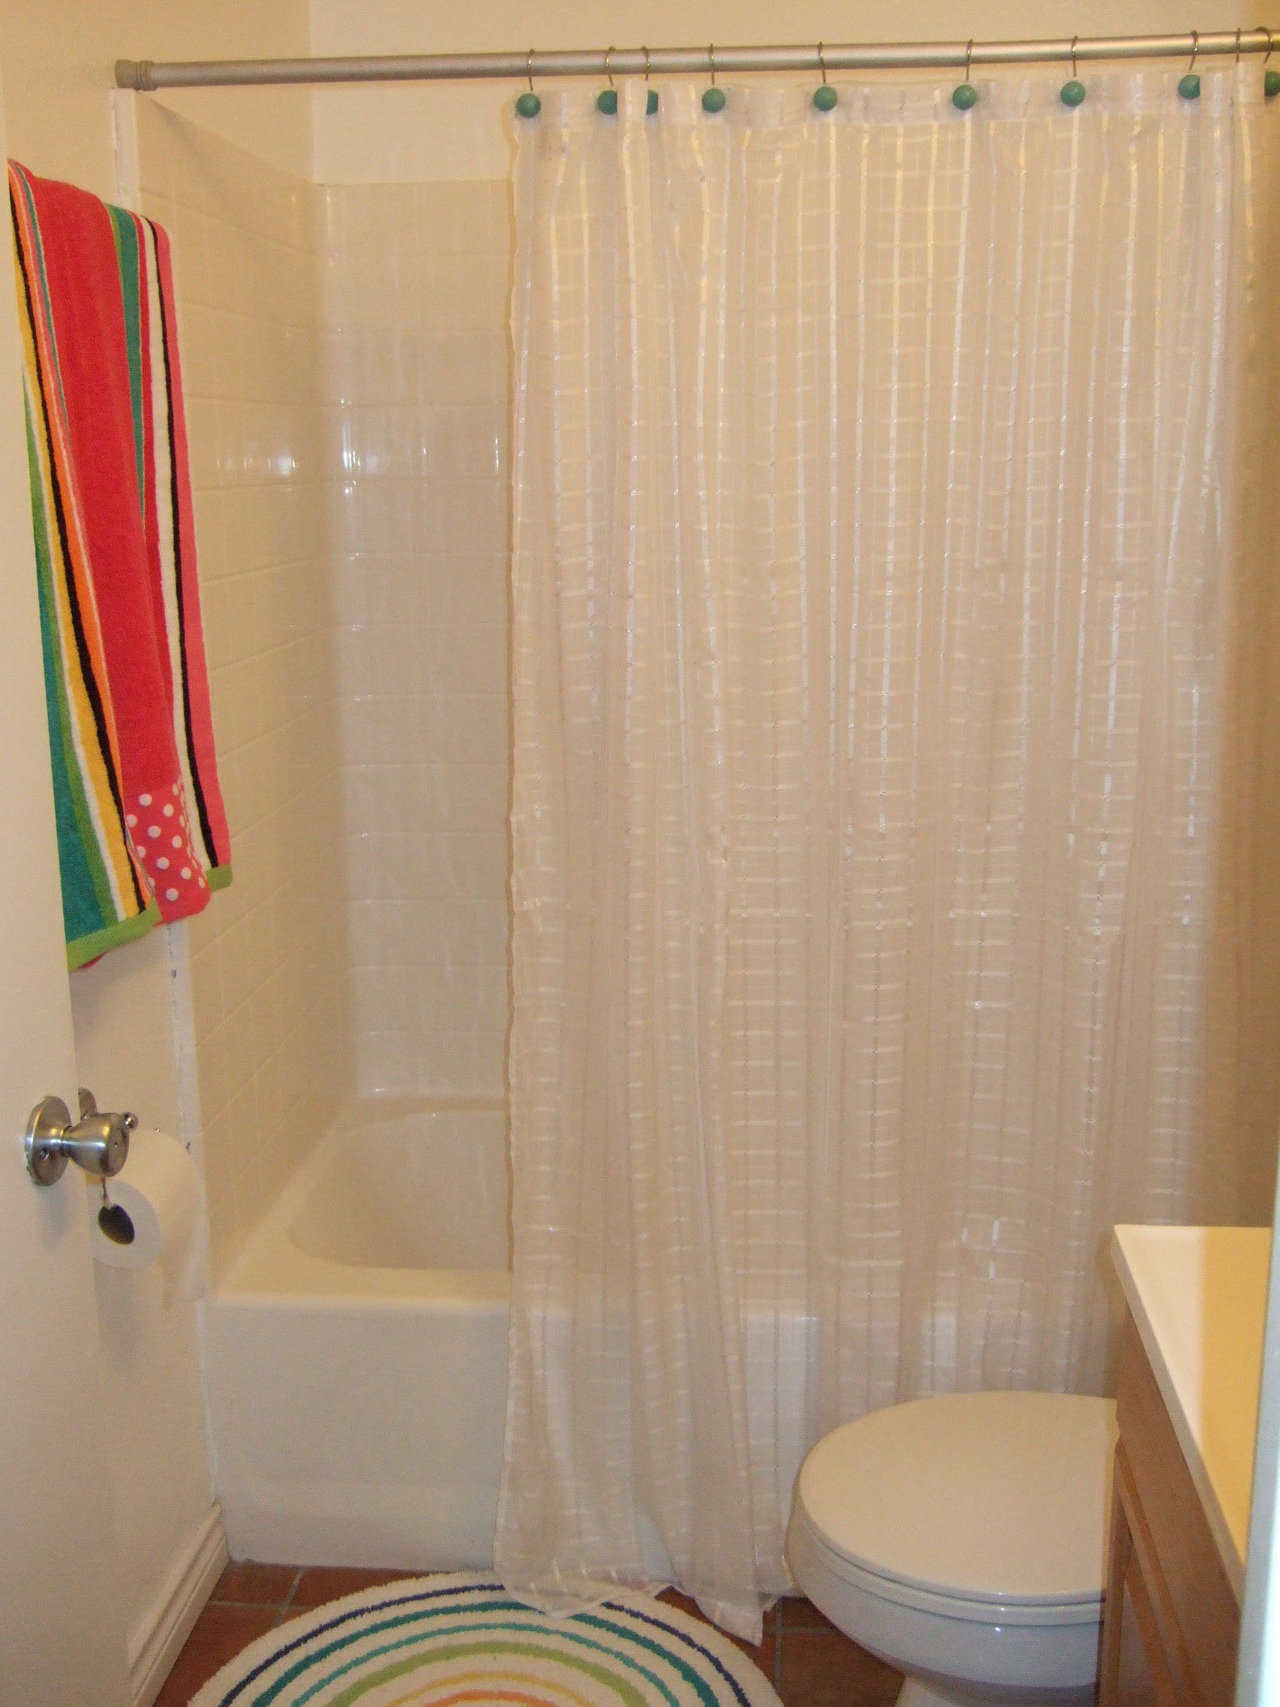 Bathroom — It has both shower and tub.